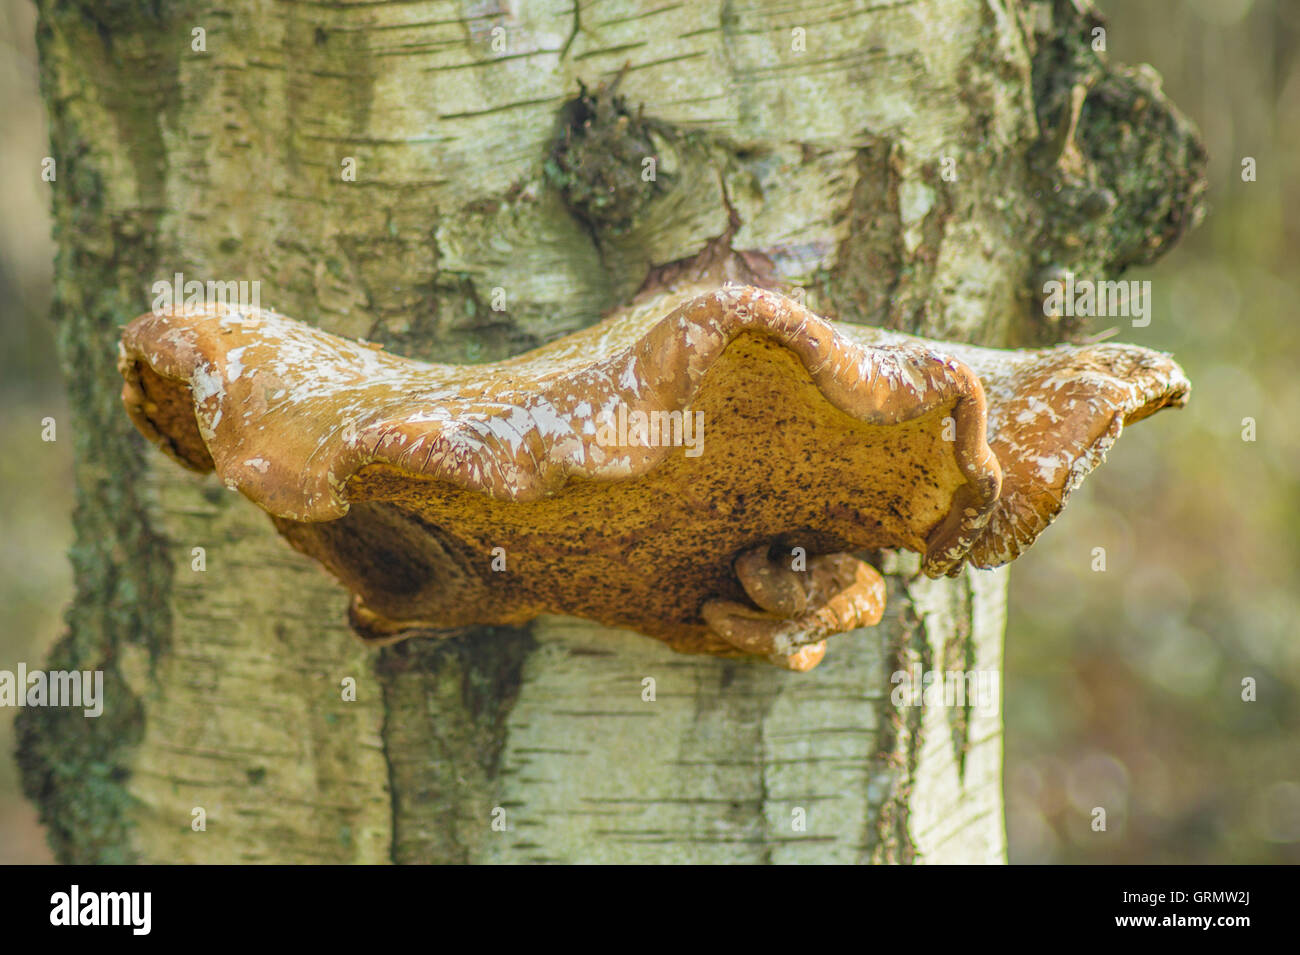 Close up image of an Orange tree fungus. Stock Photo